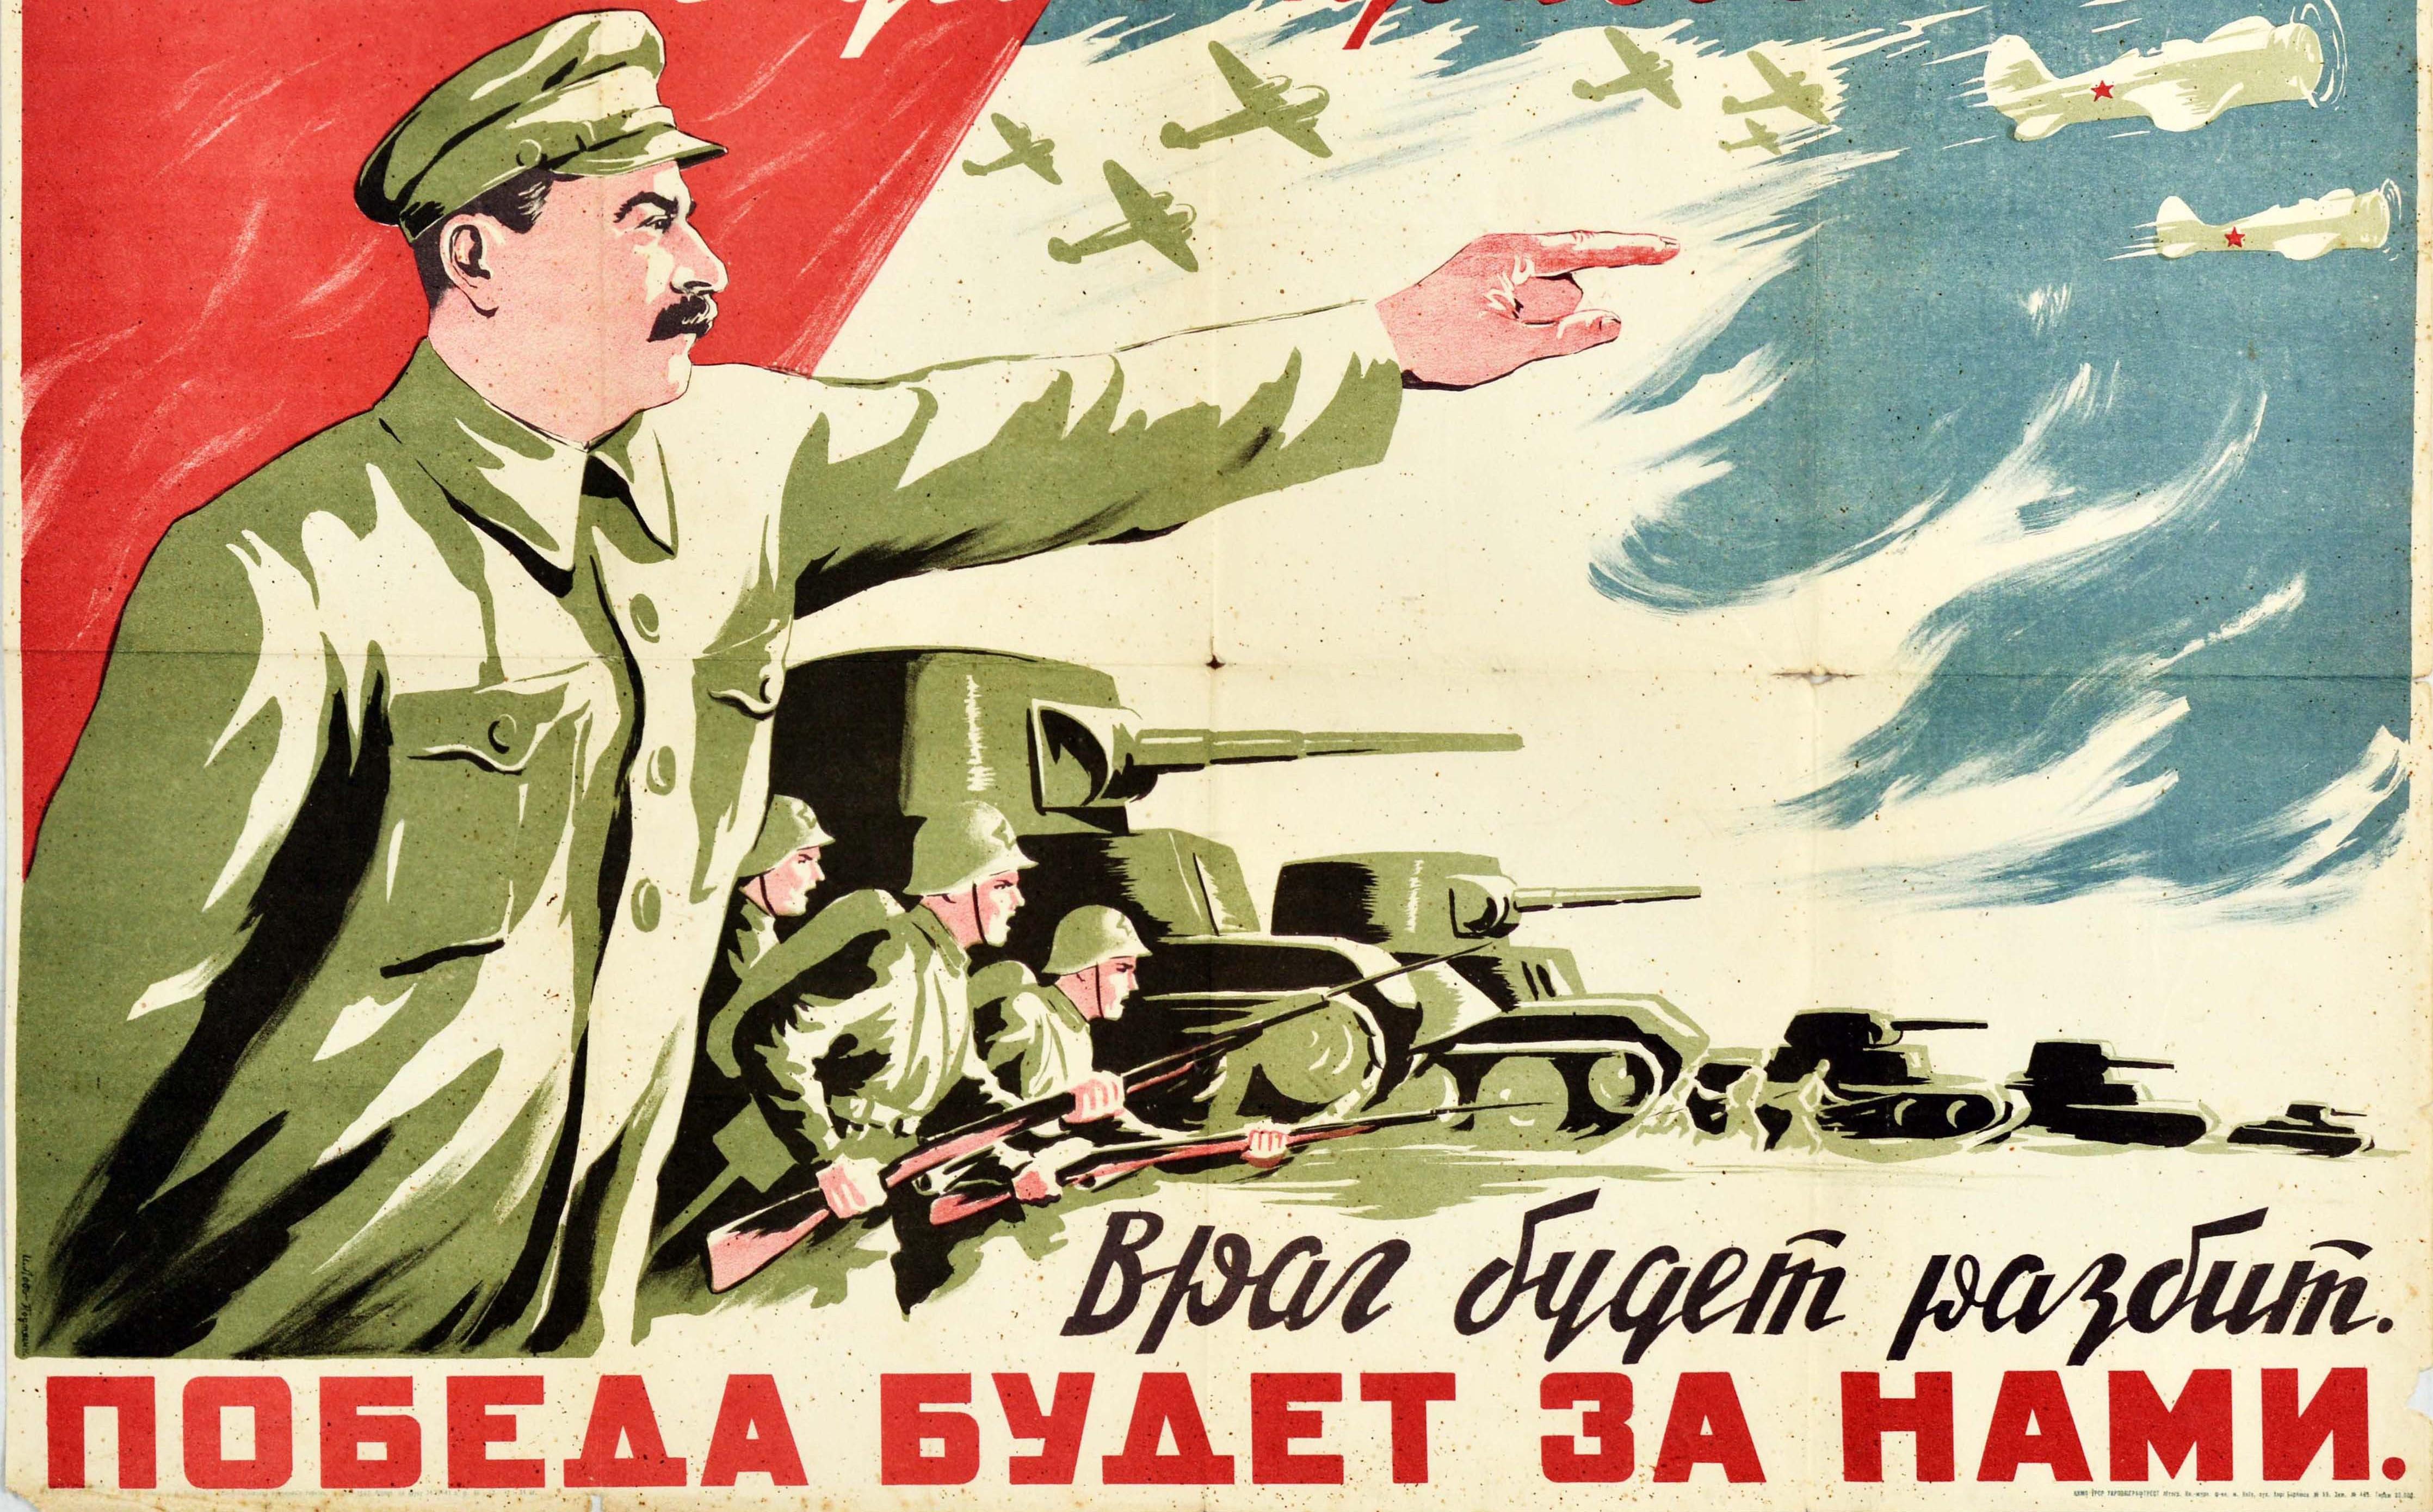 stalin poster